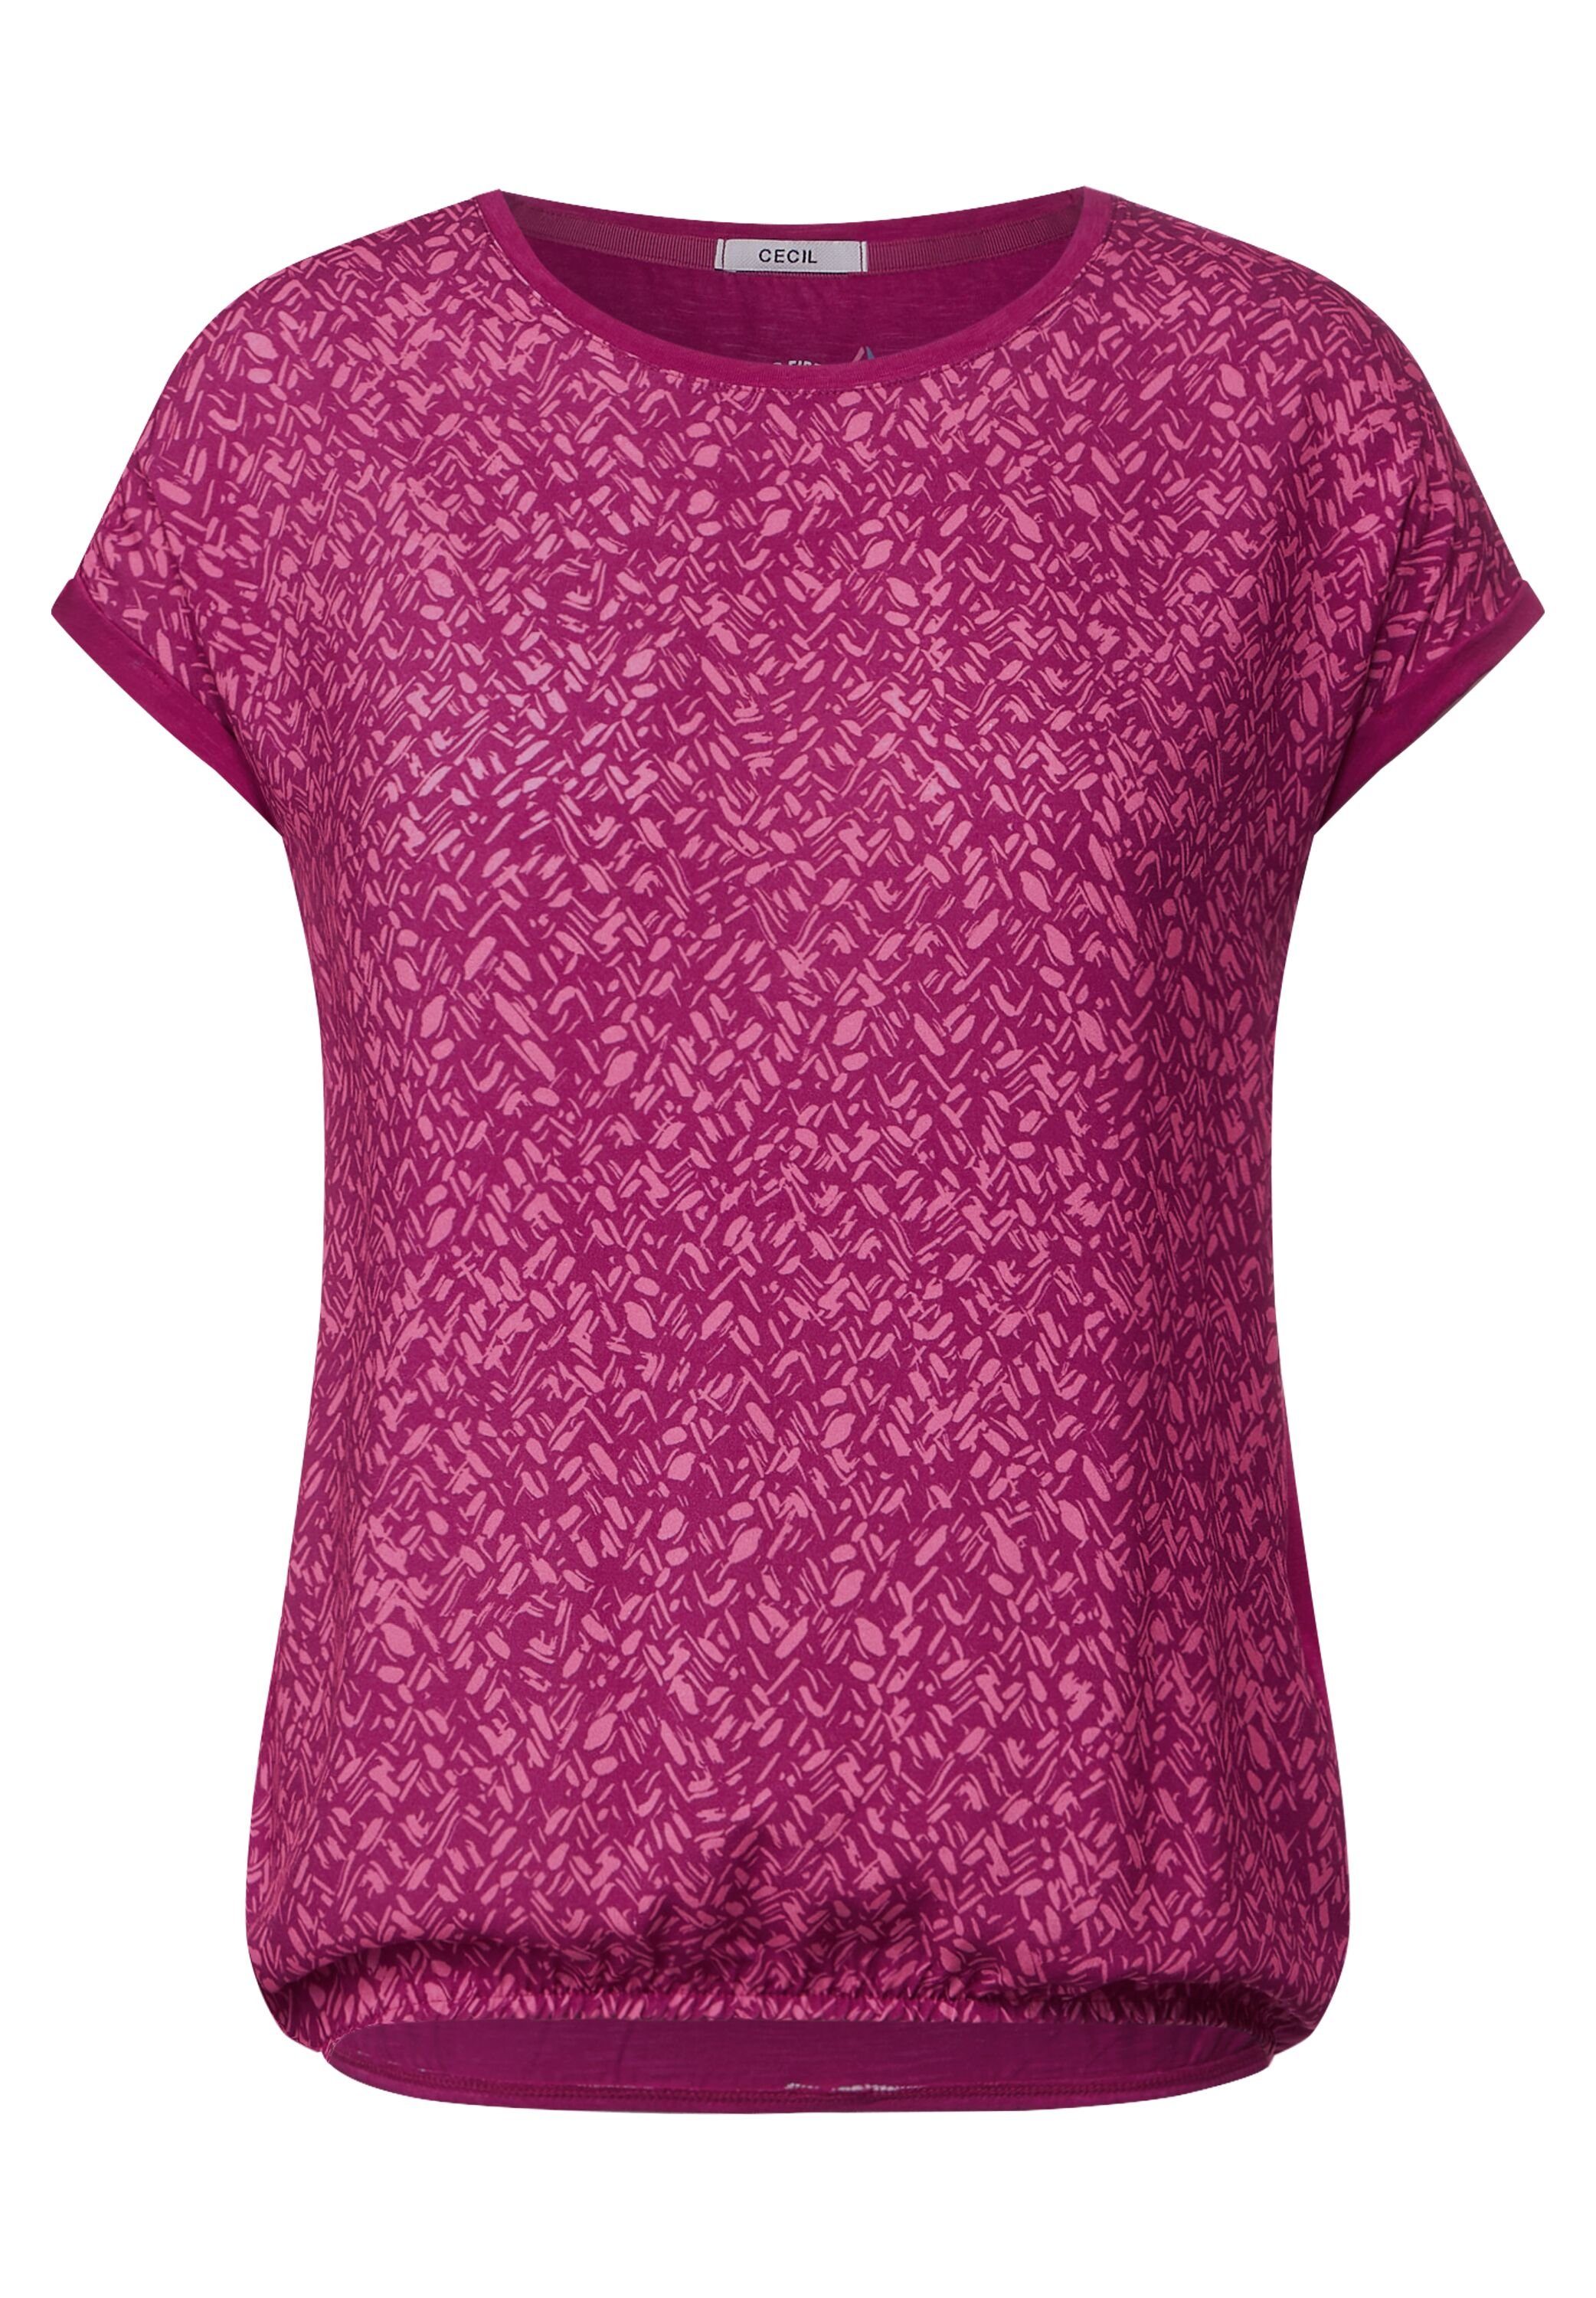 T-Shirt pink Muster Cecil Minimal cool mit